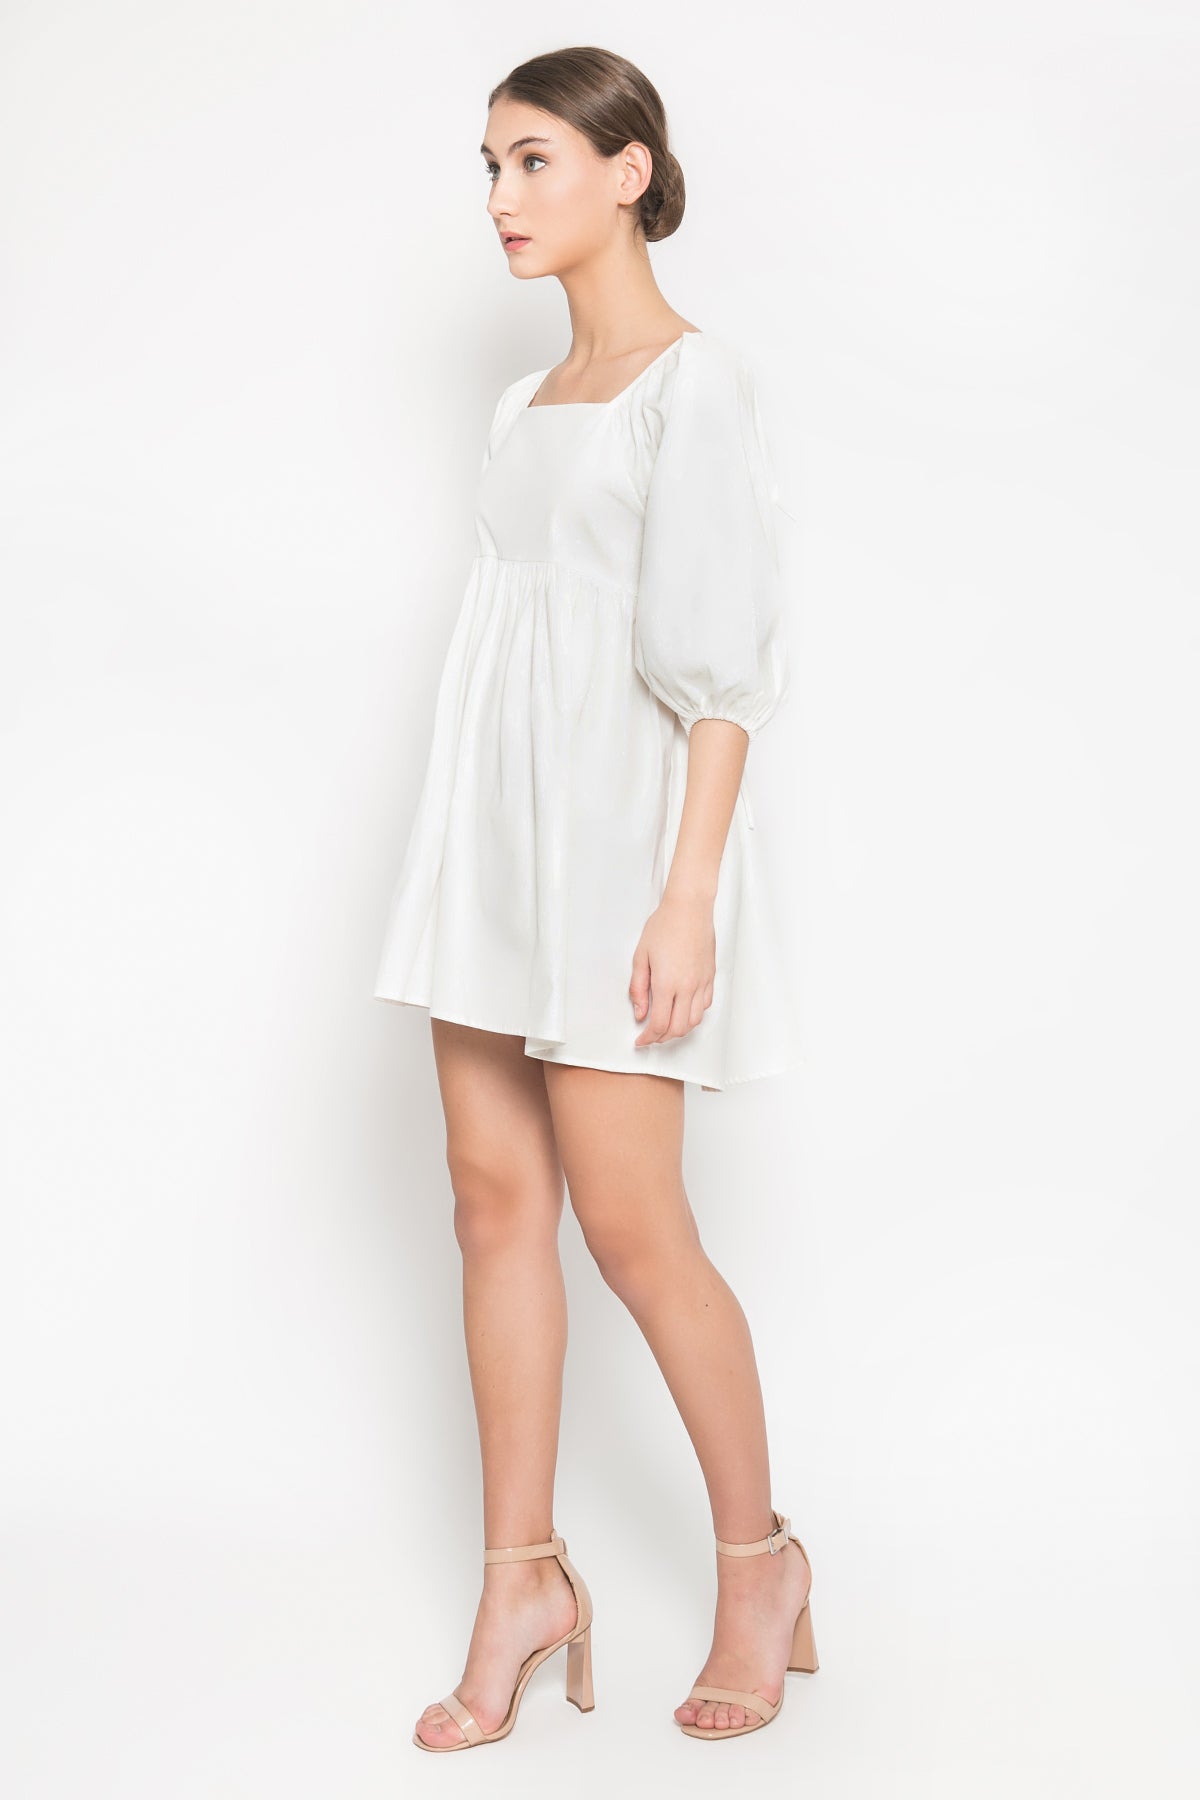 Solstice Dress in White